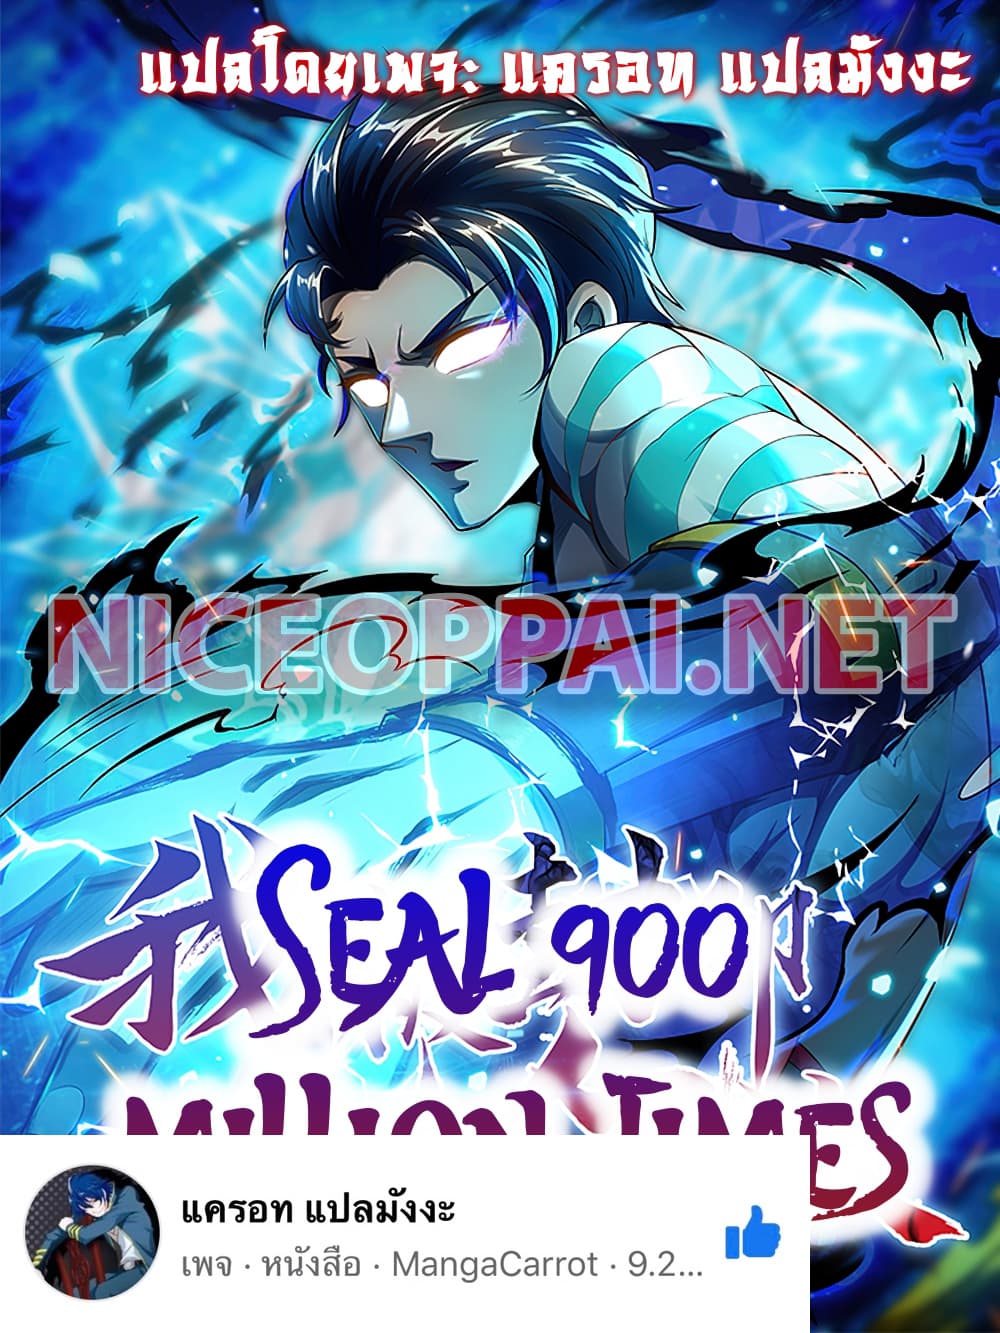 Seal 900 Million Times 14 (1)